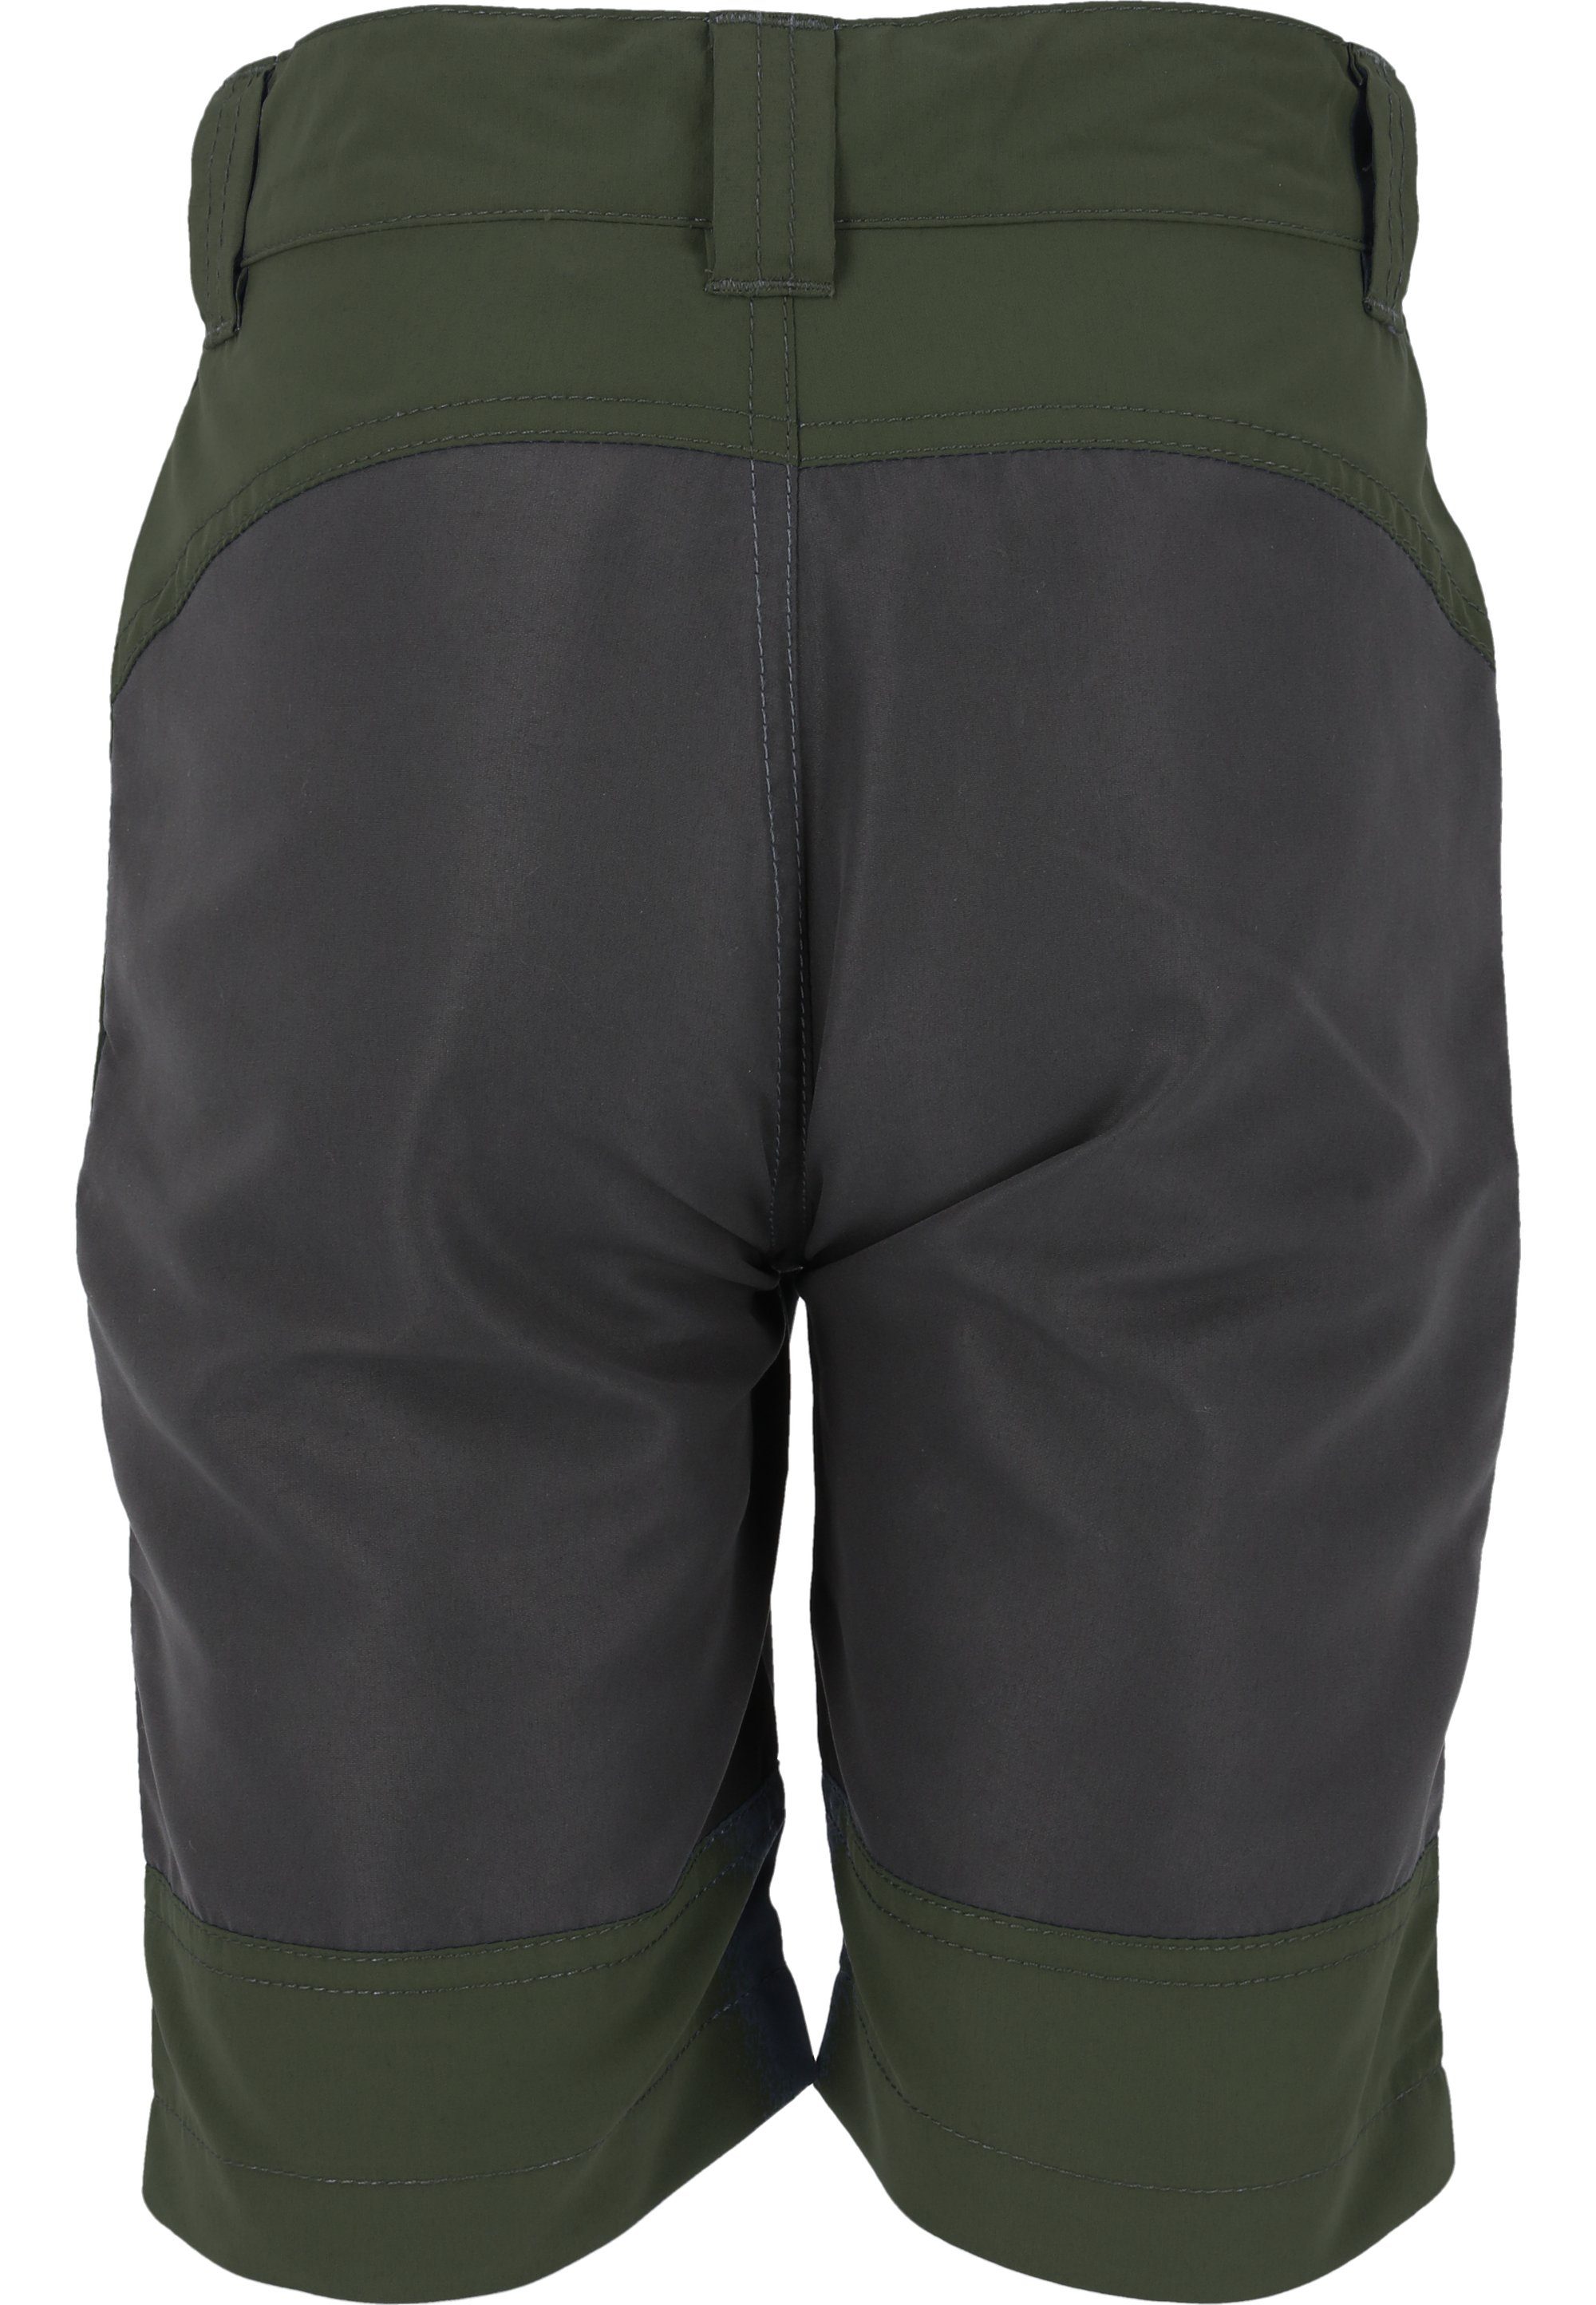 Atlantic aus ZIGZAG olivgrün-schwarz Material Shorts robustem